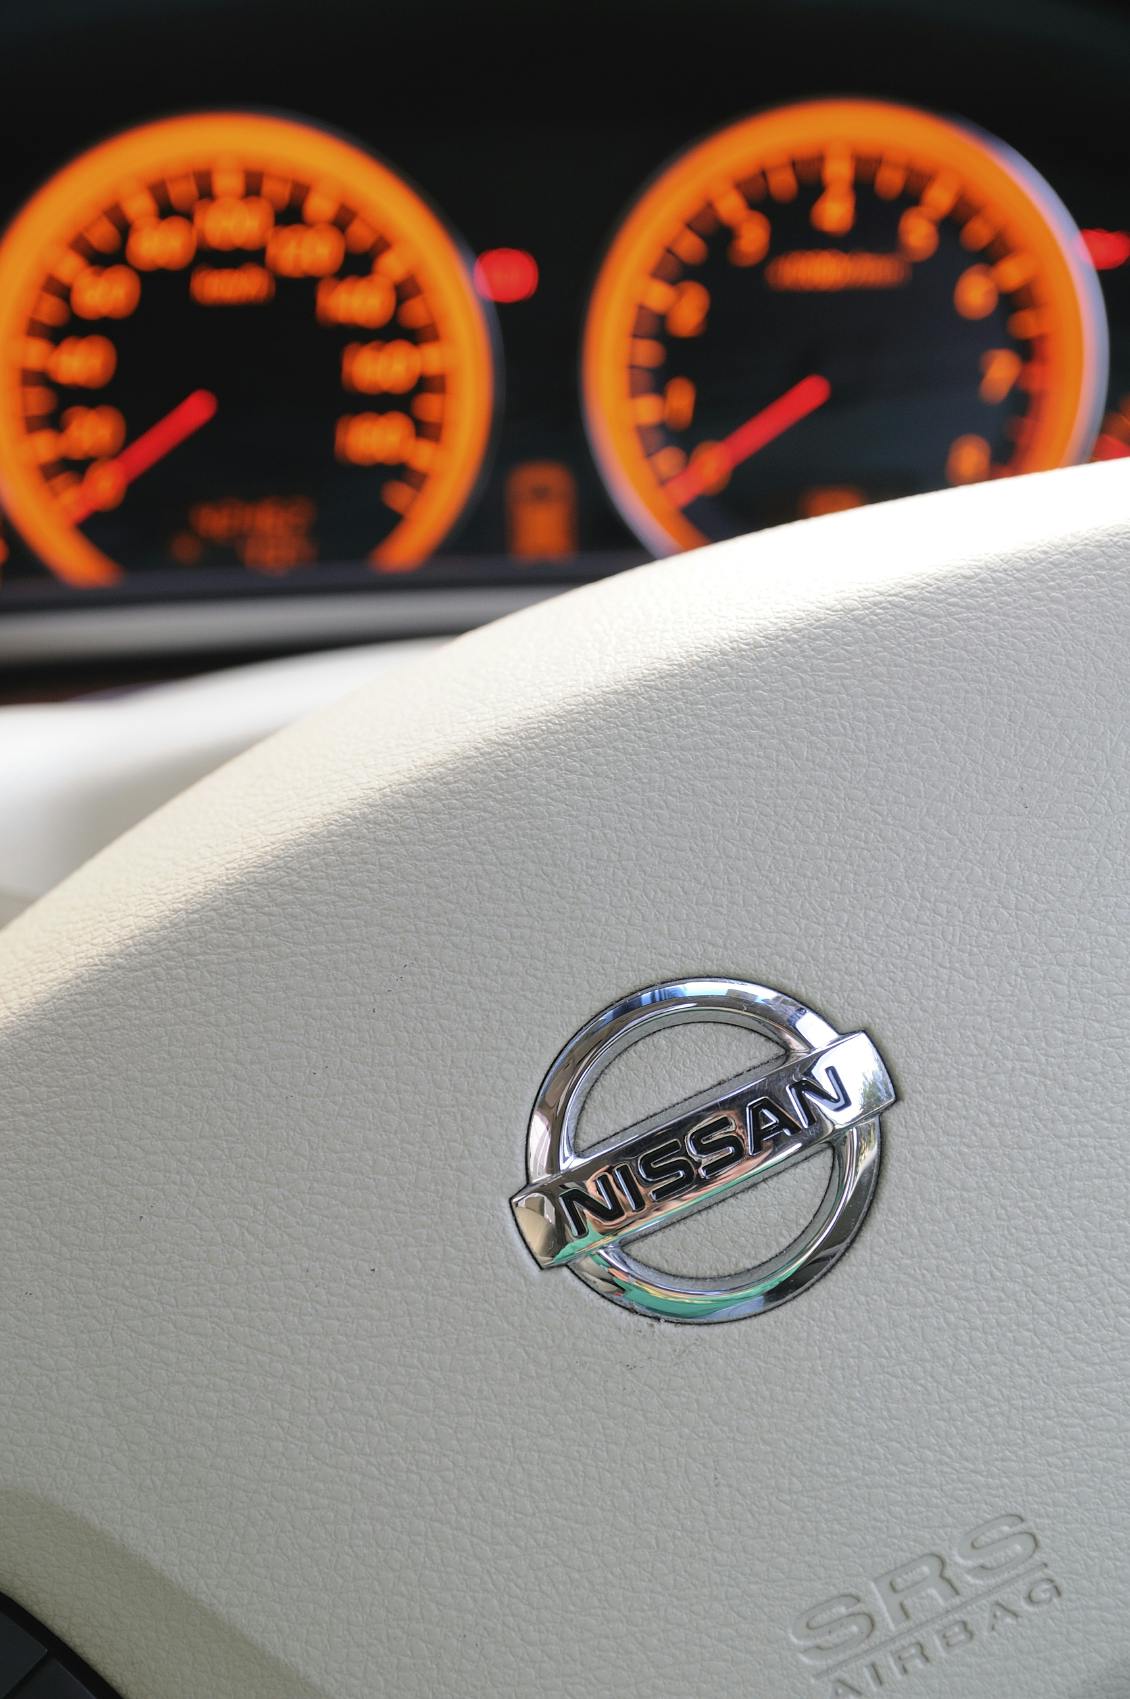 Nissan recalls millions of cars